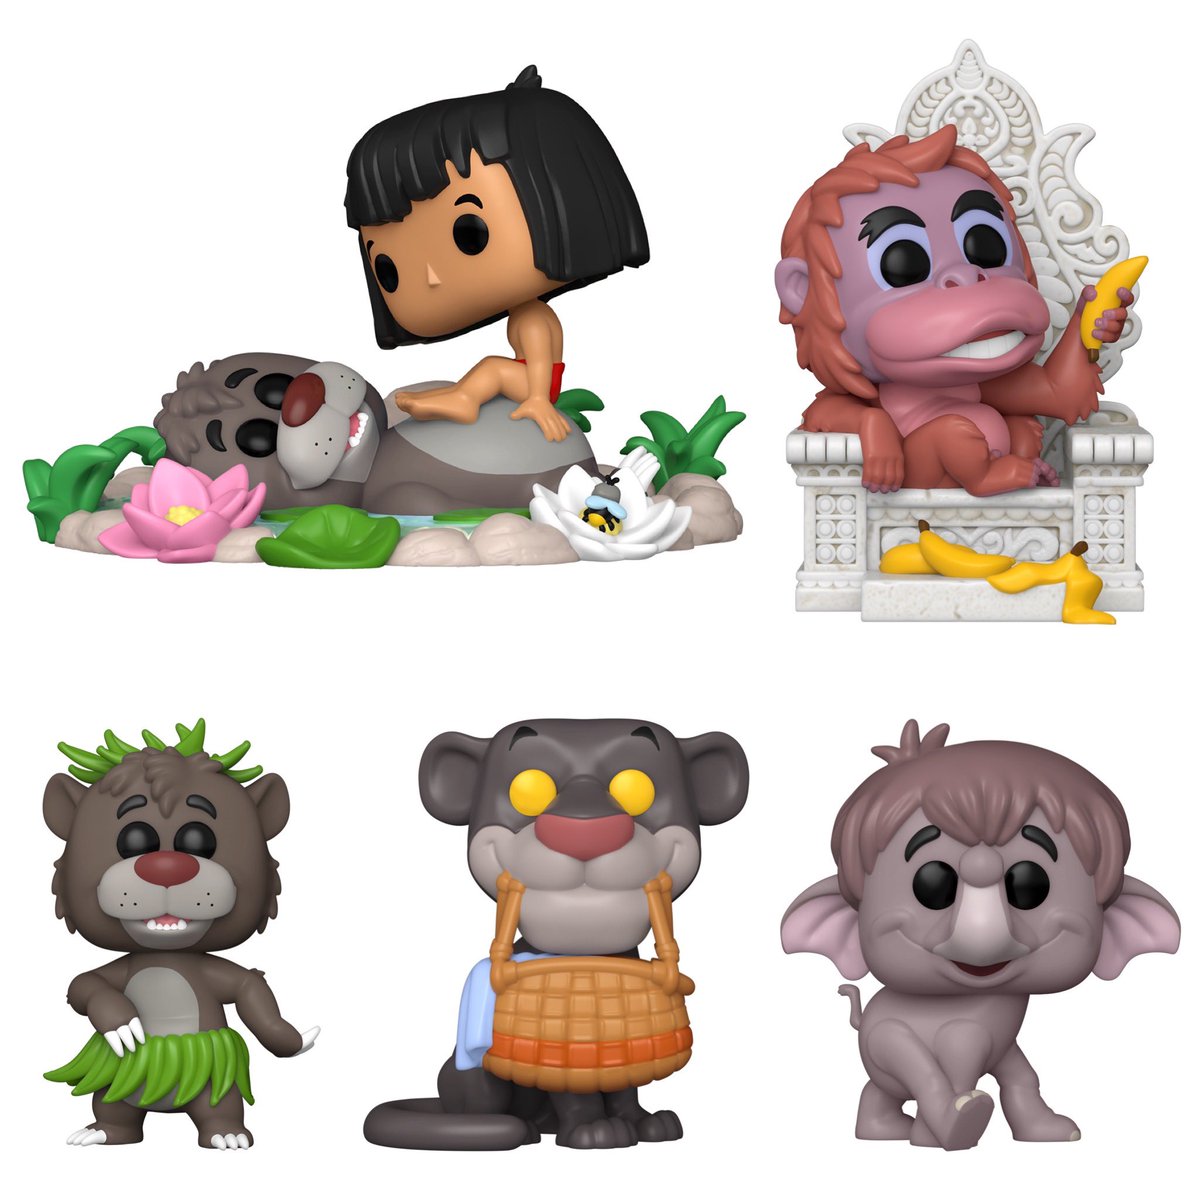 Preorder Now: The Jungle Book Pops!
#Ad #Disney #JungleBook
.
Entertainment Earth - distracker.info/3H7AHqG
Amazon - amzn.to/3yl0xX9
.
#Funko #FunkoPop #FunkoPopVinyl #Pop #PopVinyl #Collectibles #Collectible #FunkoCollector #FunkoPops #Collector #Toy #Toys #DisTrackers